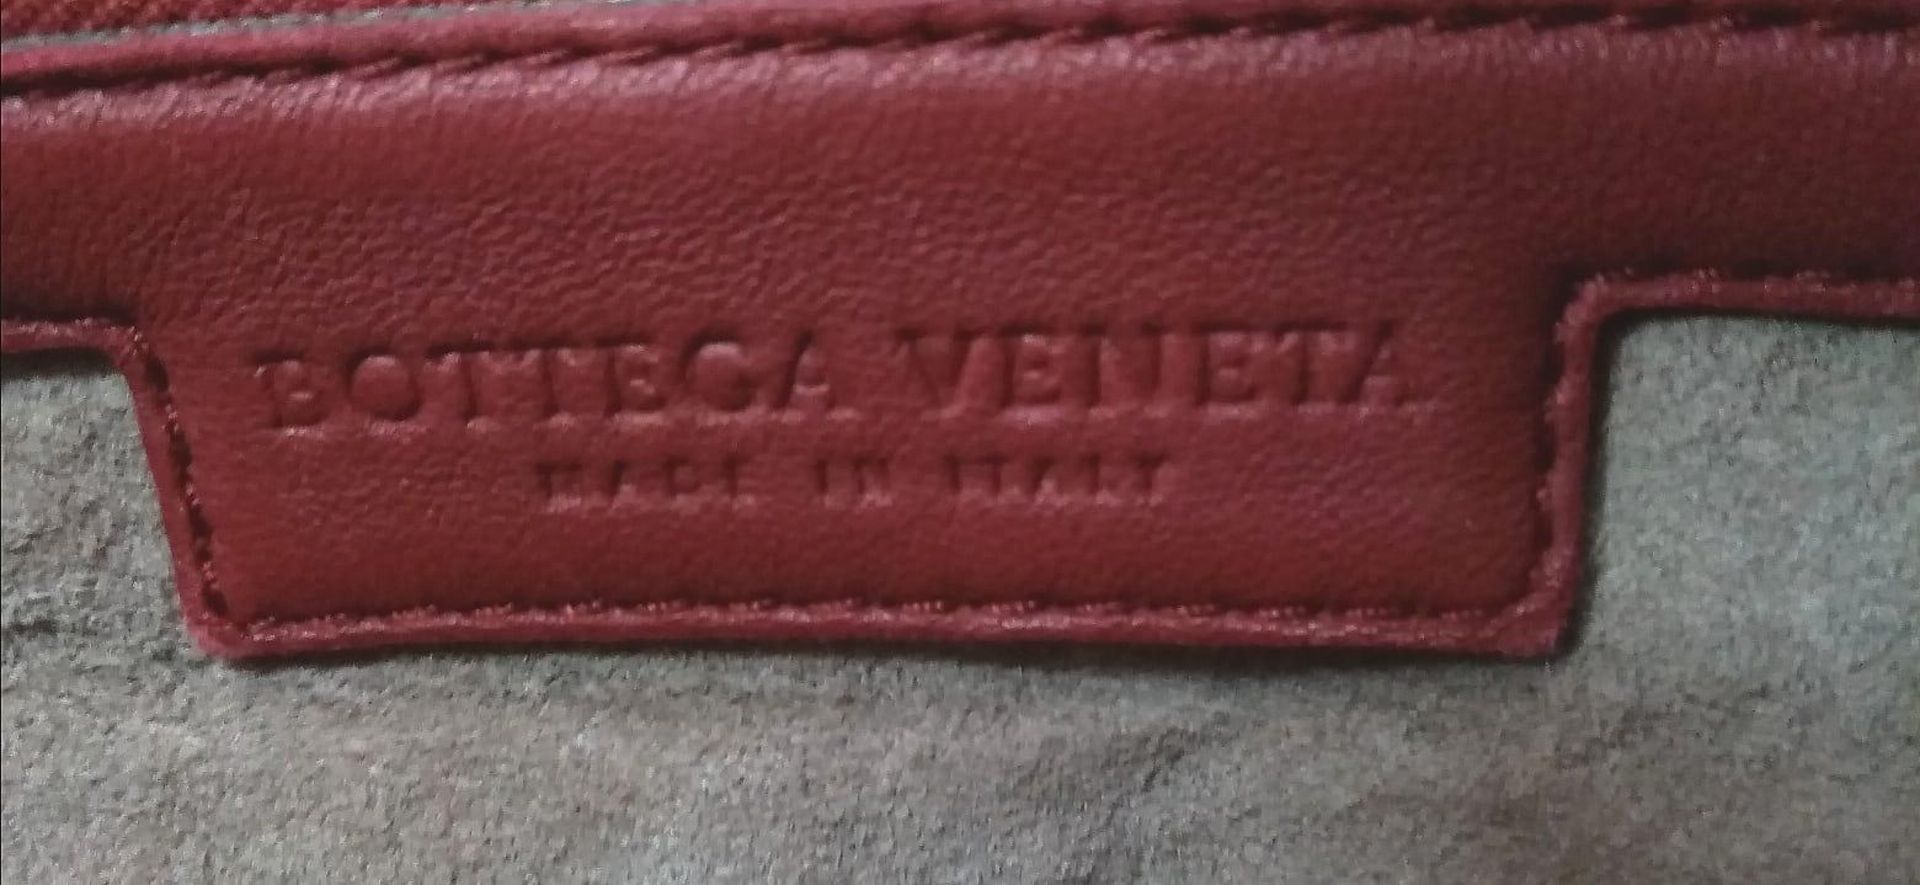 A Bottega Veneta large Hobo bag, soft red nappa leather, beige interior, gold tone top zipper. - Image 9 of 10